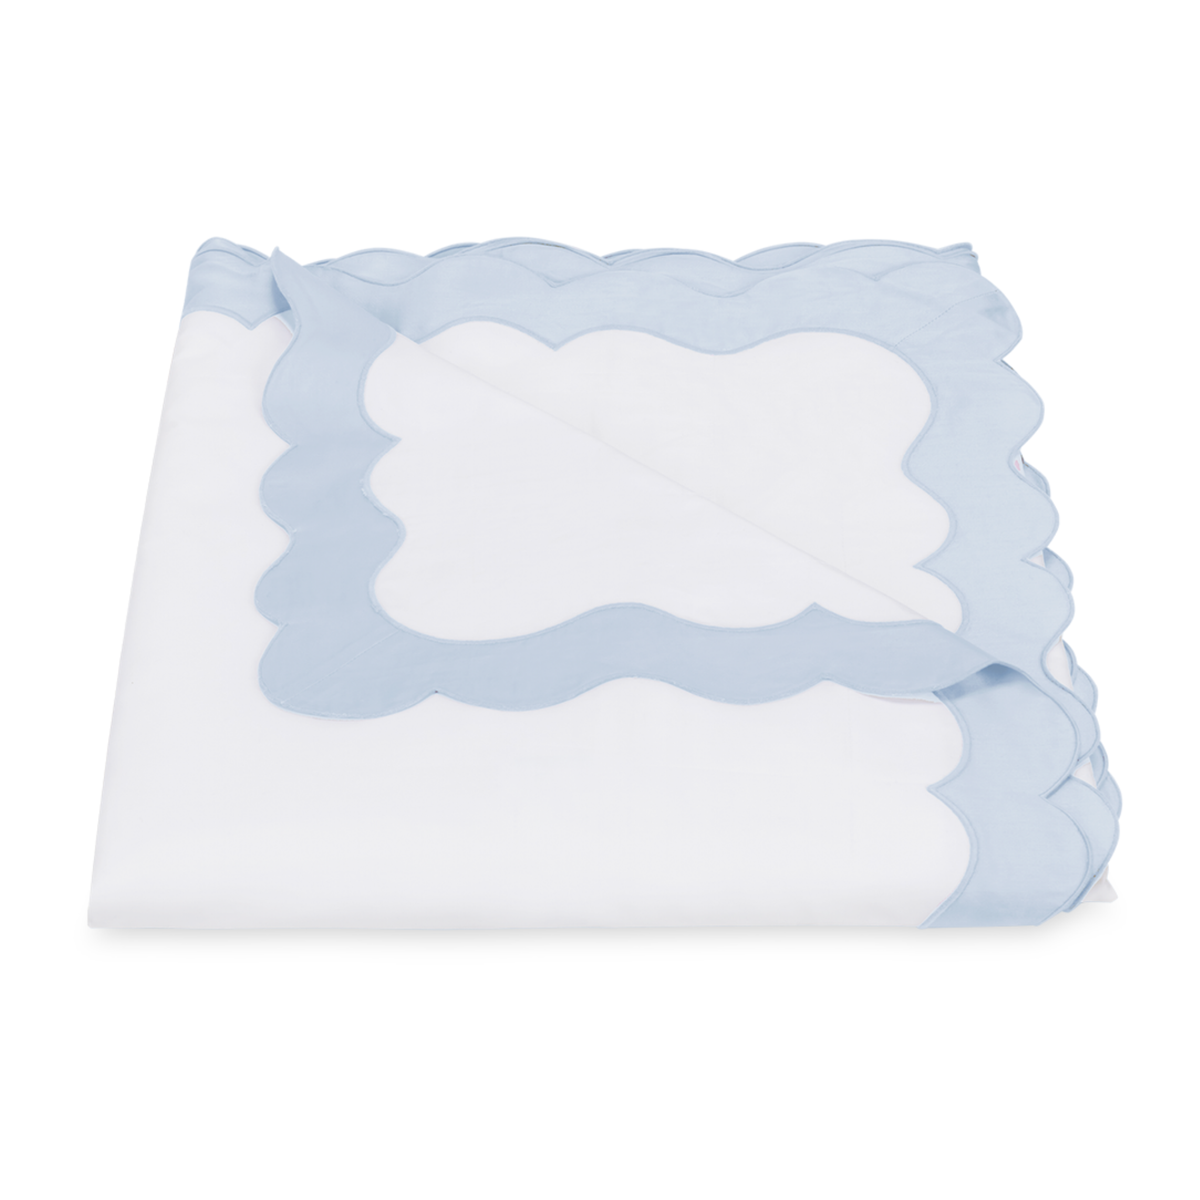 Folded Duvet Cover of Matouk Lorelei Bedding in Blue Color